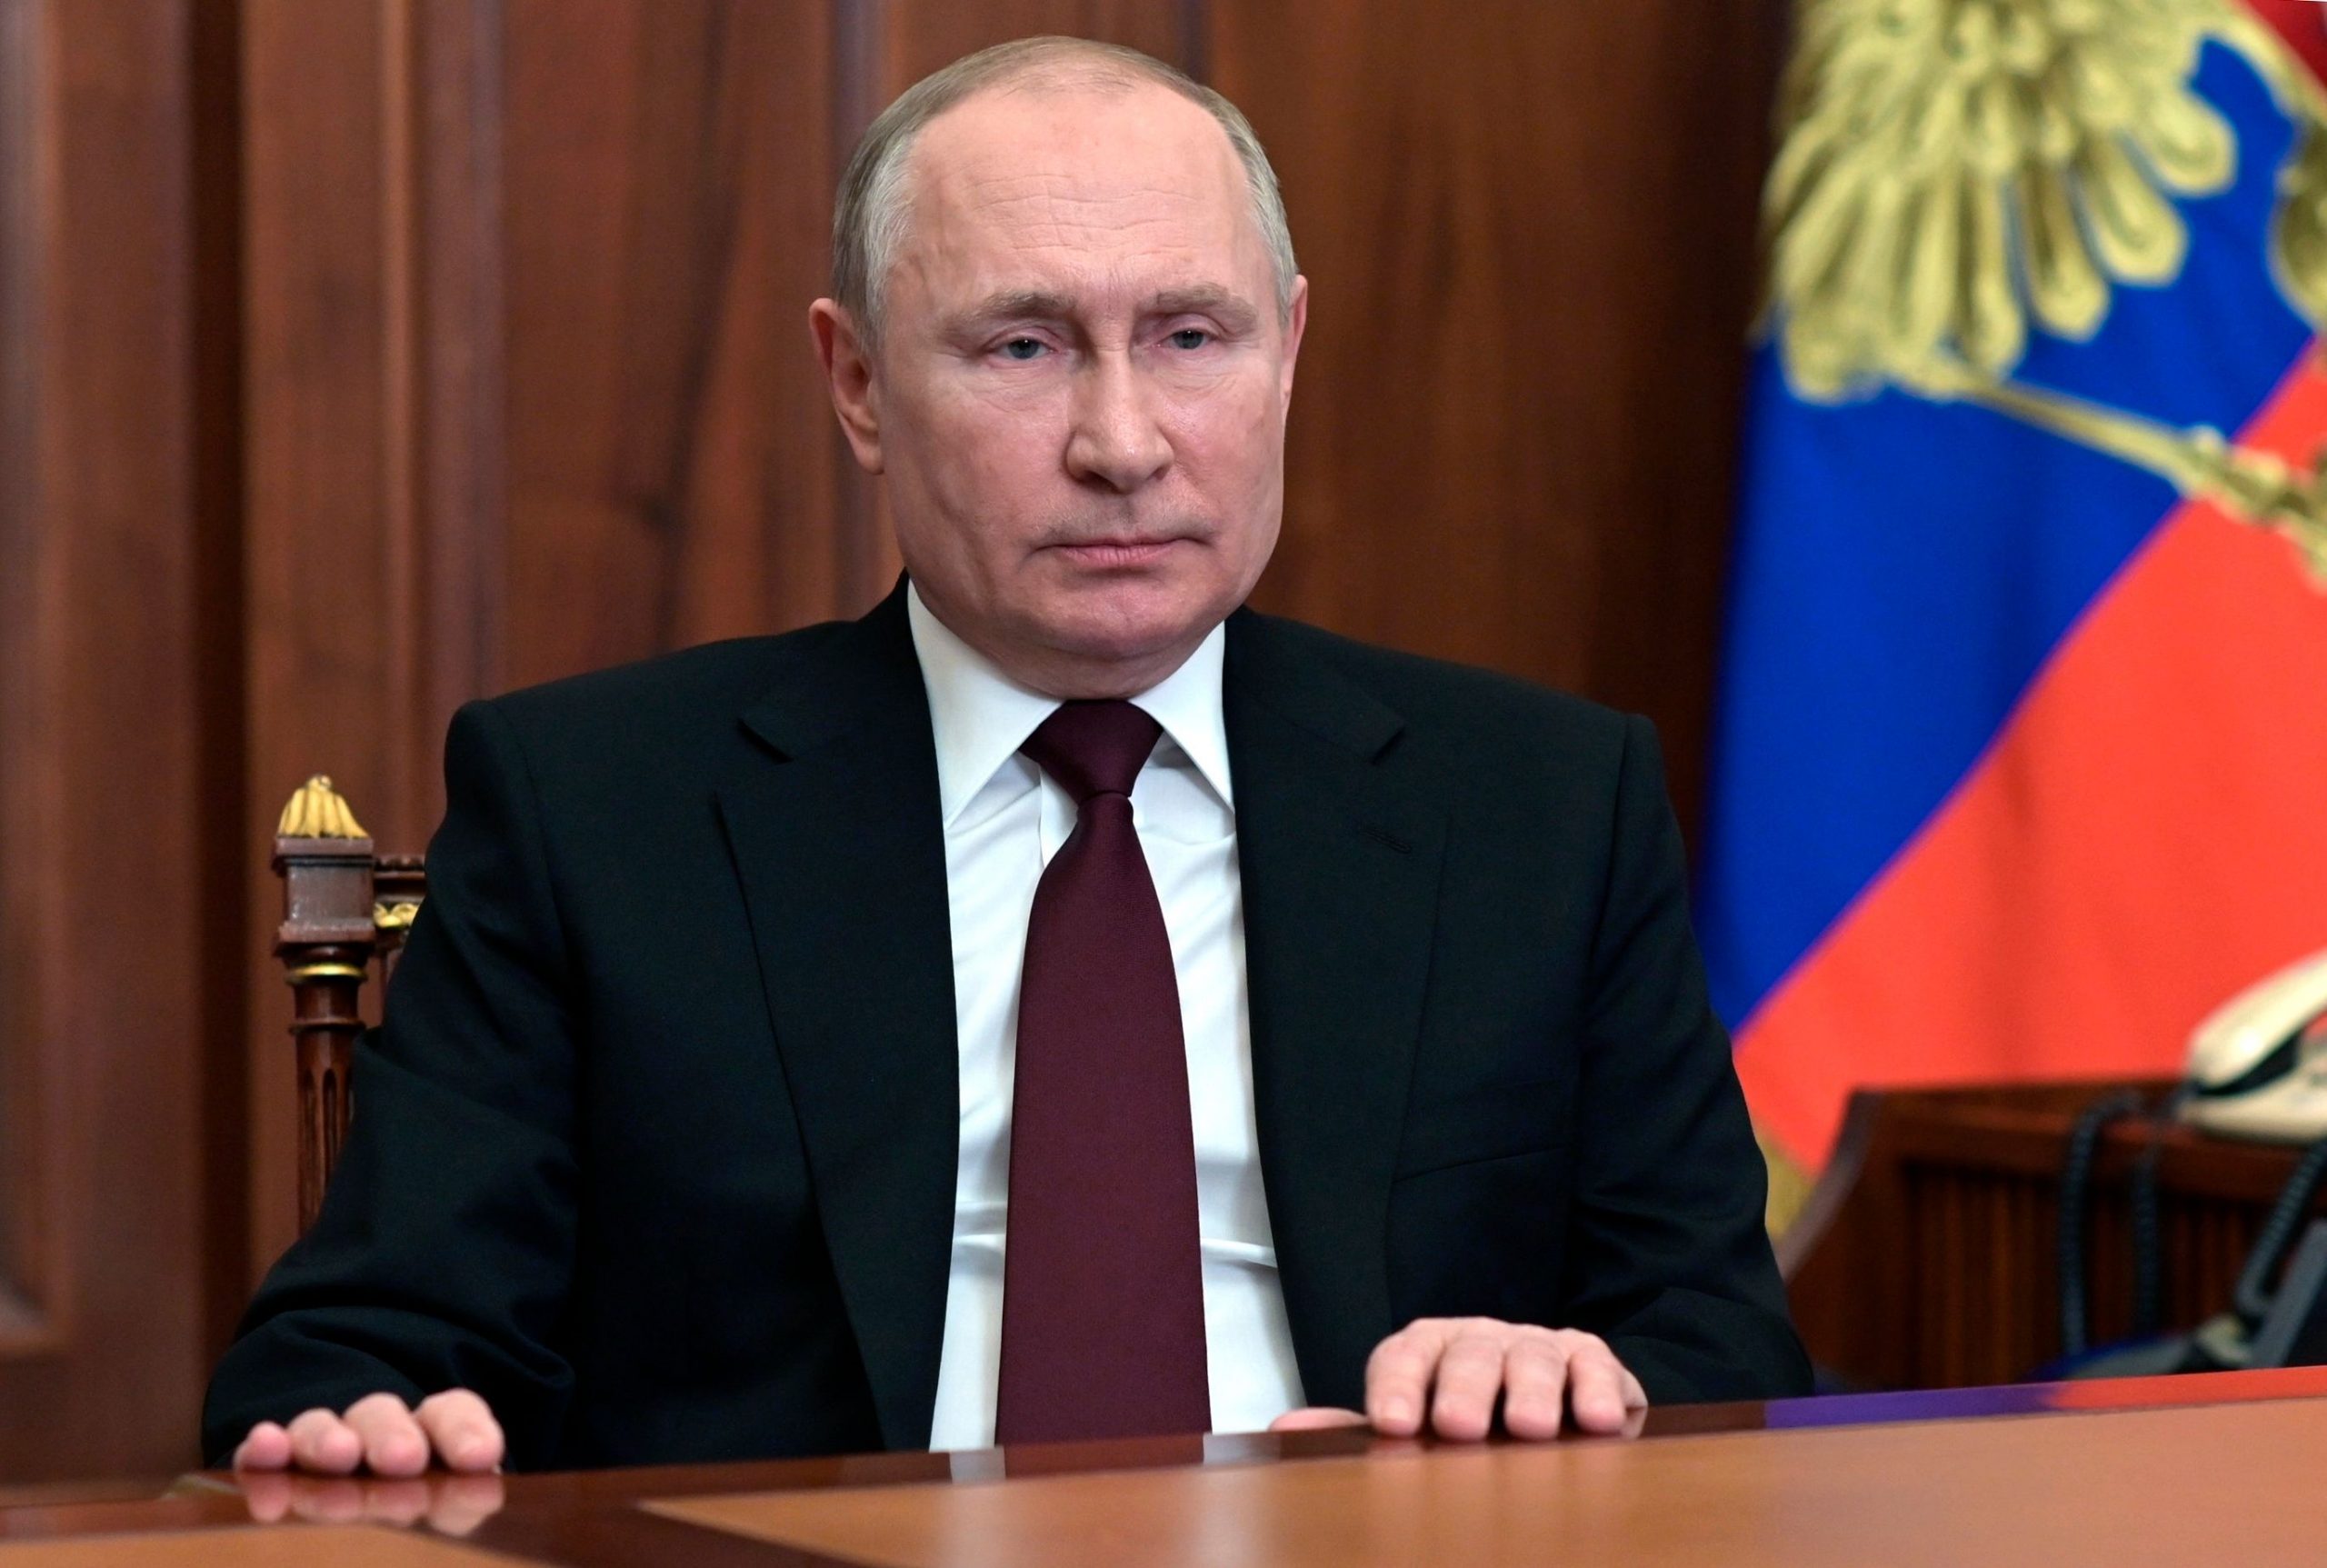 EU to sanction Vladimir Putin and Sergey Lavrov, German foreign minister says